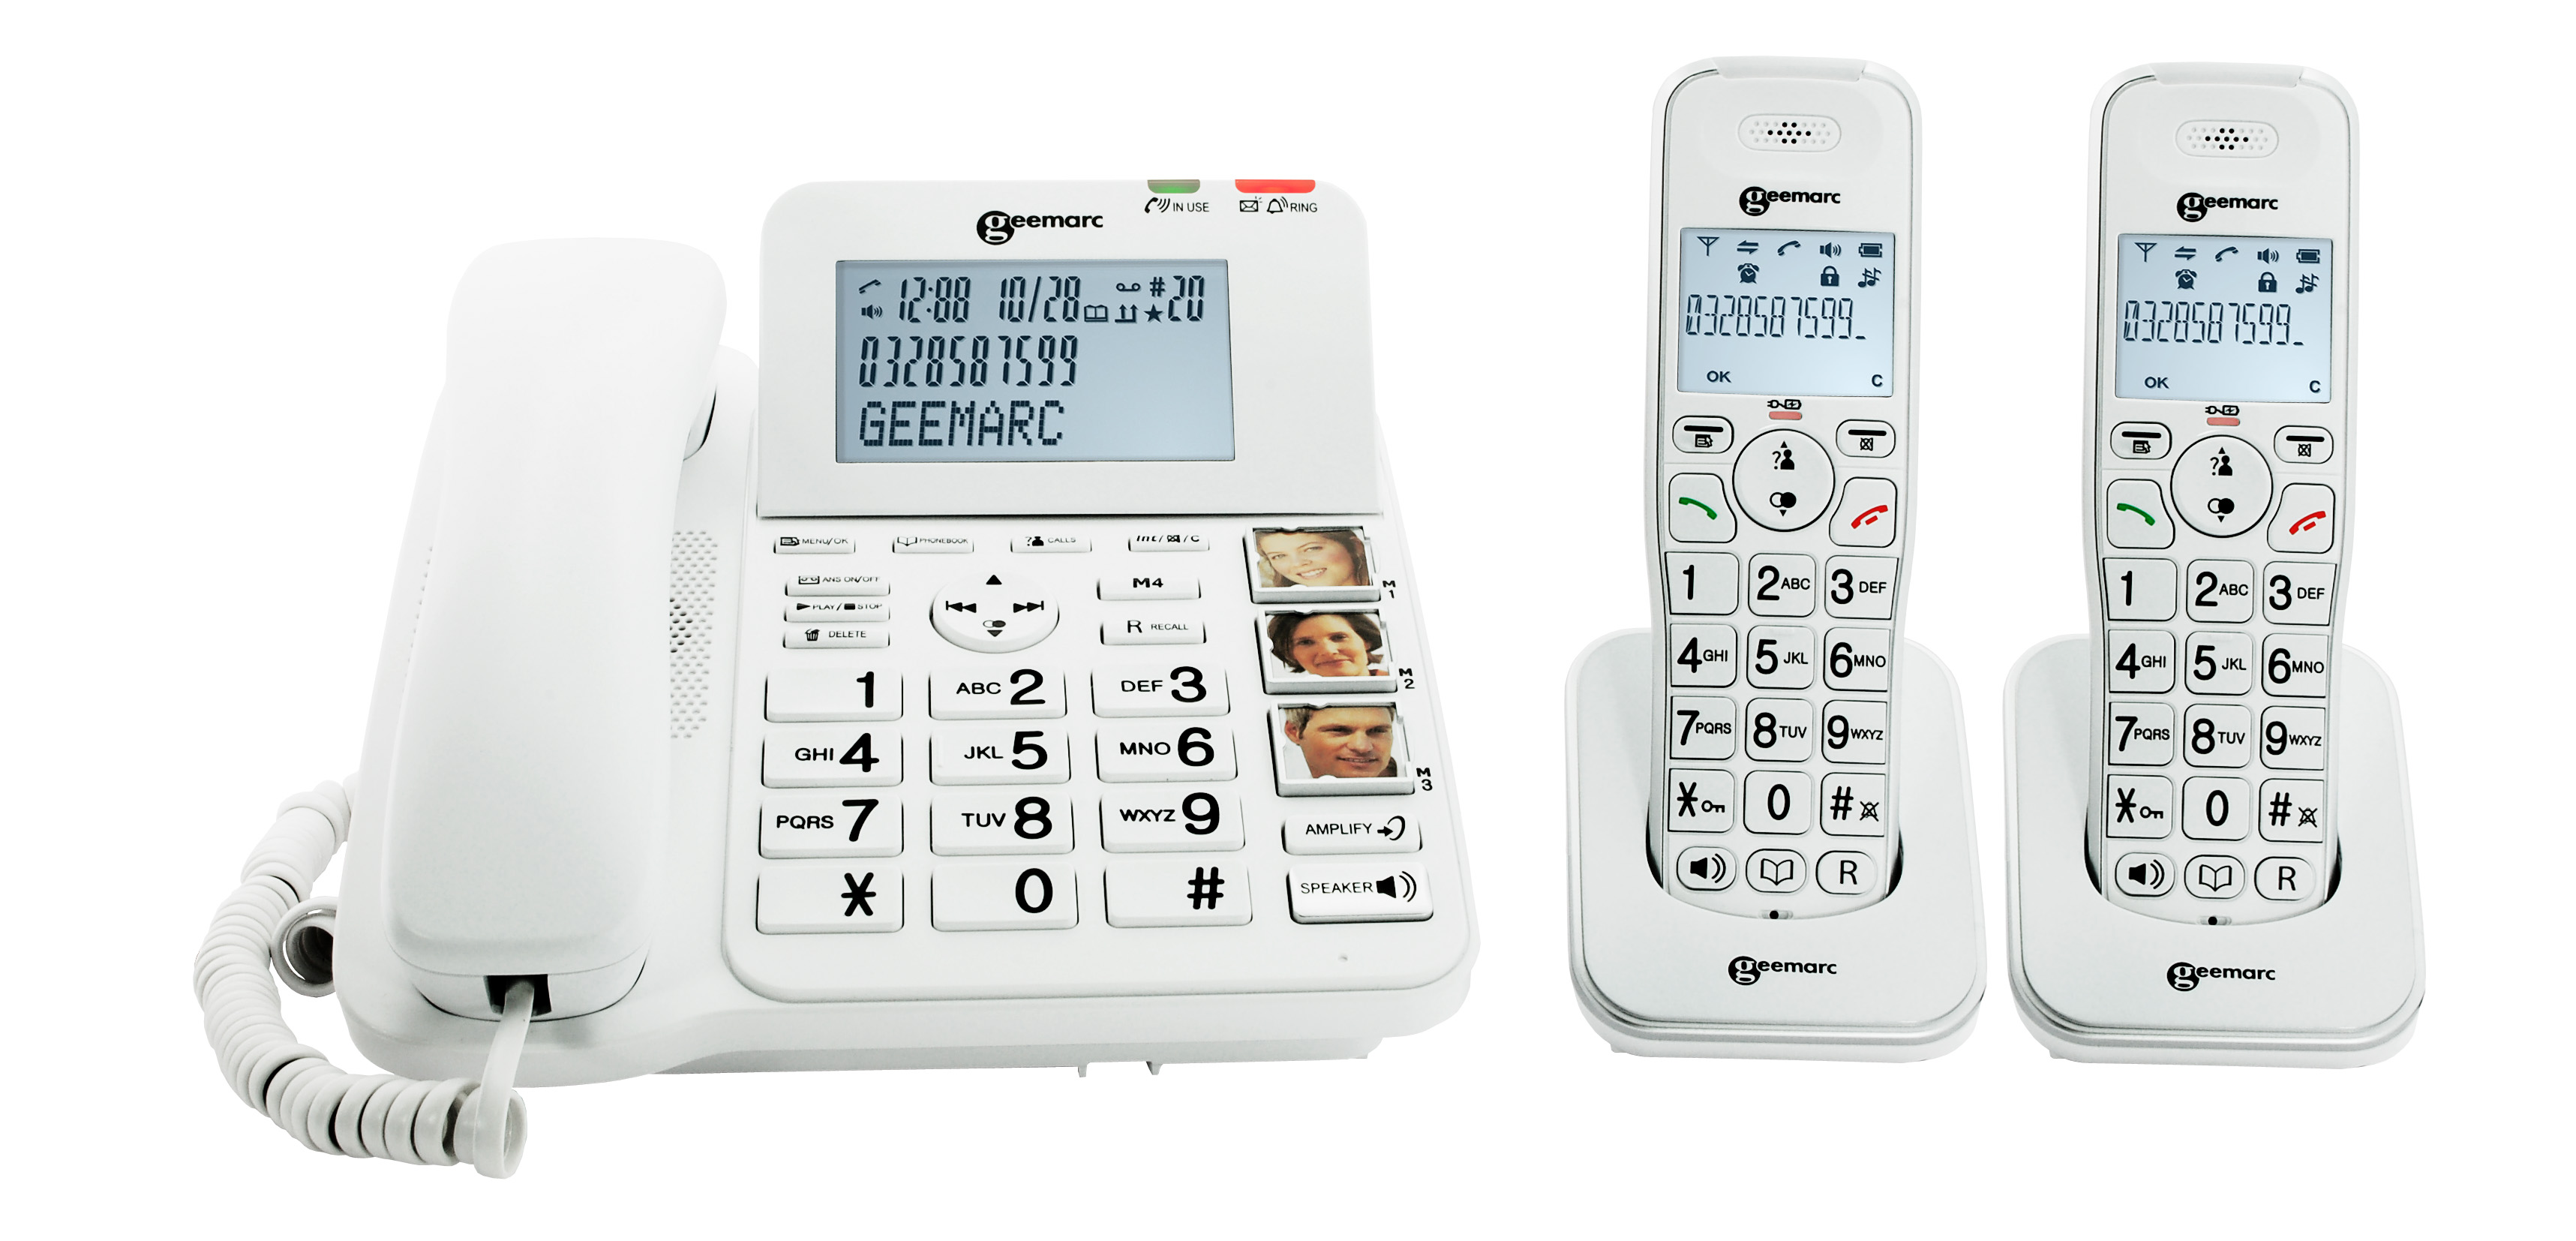 Téléphone sans fil AMPLIDECT 295 - GEEMARC TELECOM